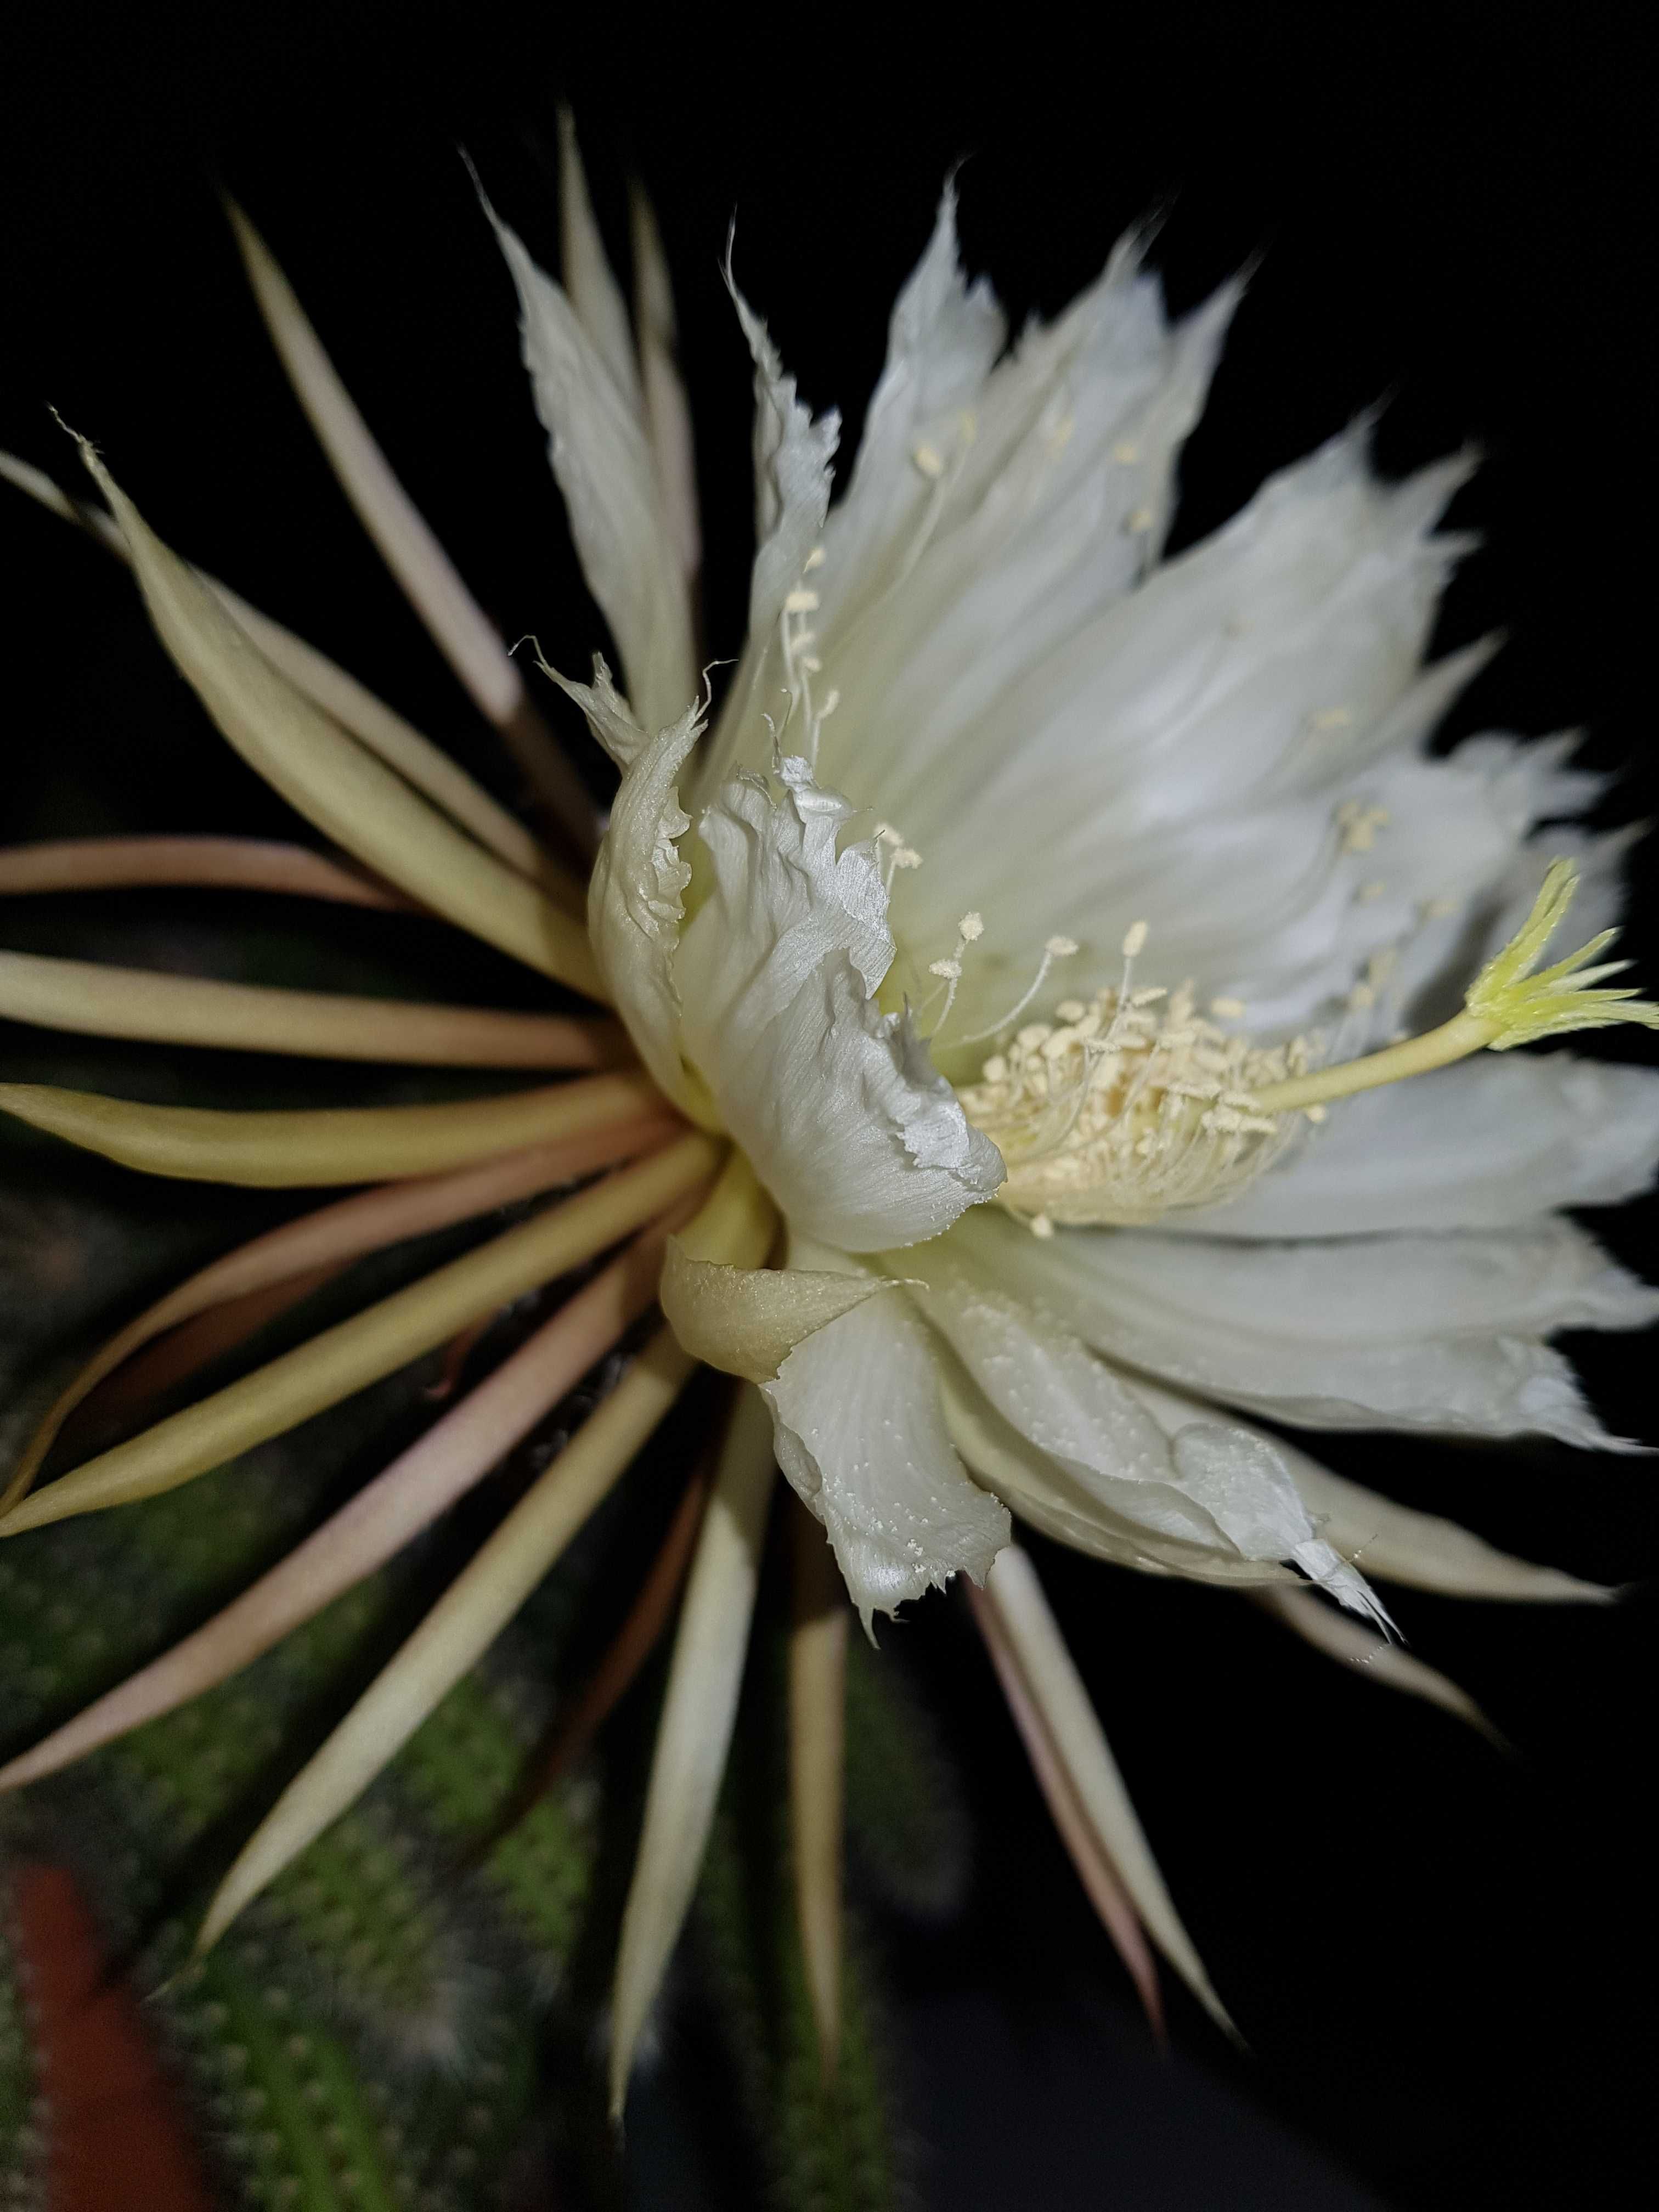 Селеницереус птерантус " Королева ночи"  редкий вид кактуса